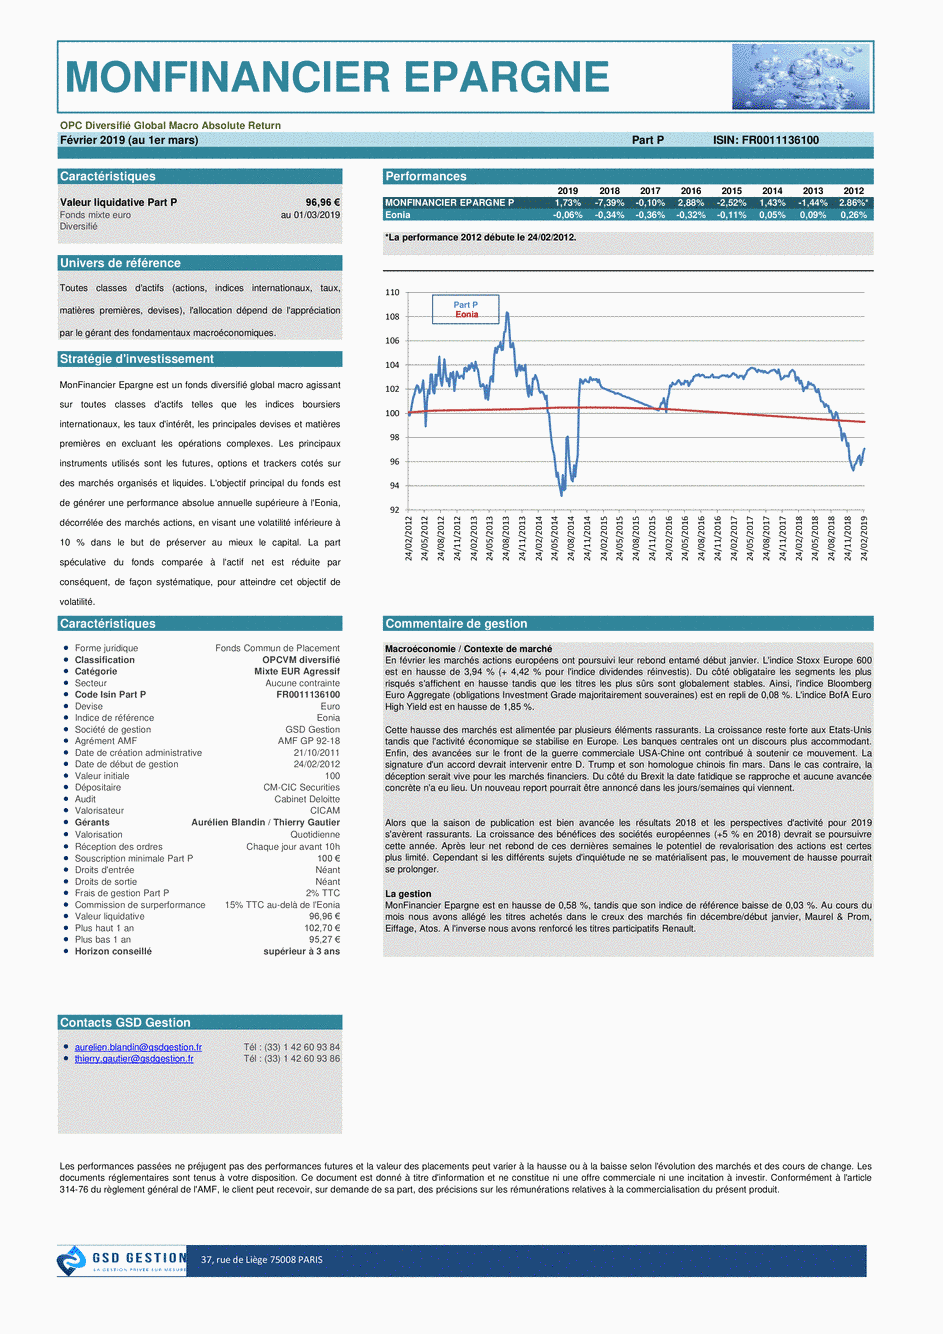 Reporting Monfinancier Epargne P - 08/03/2019 - undefined